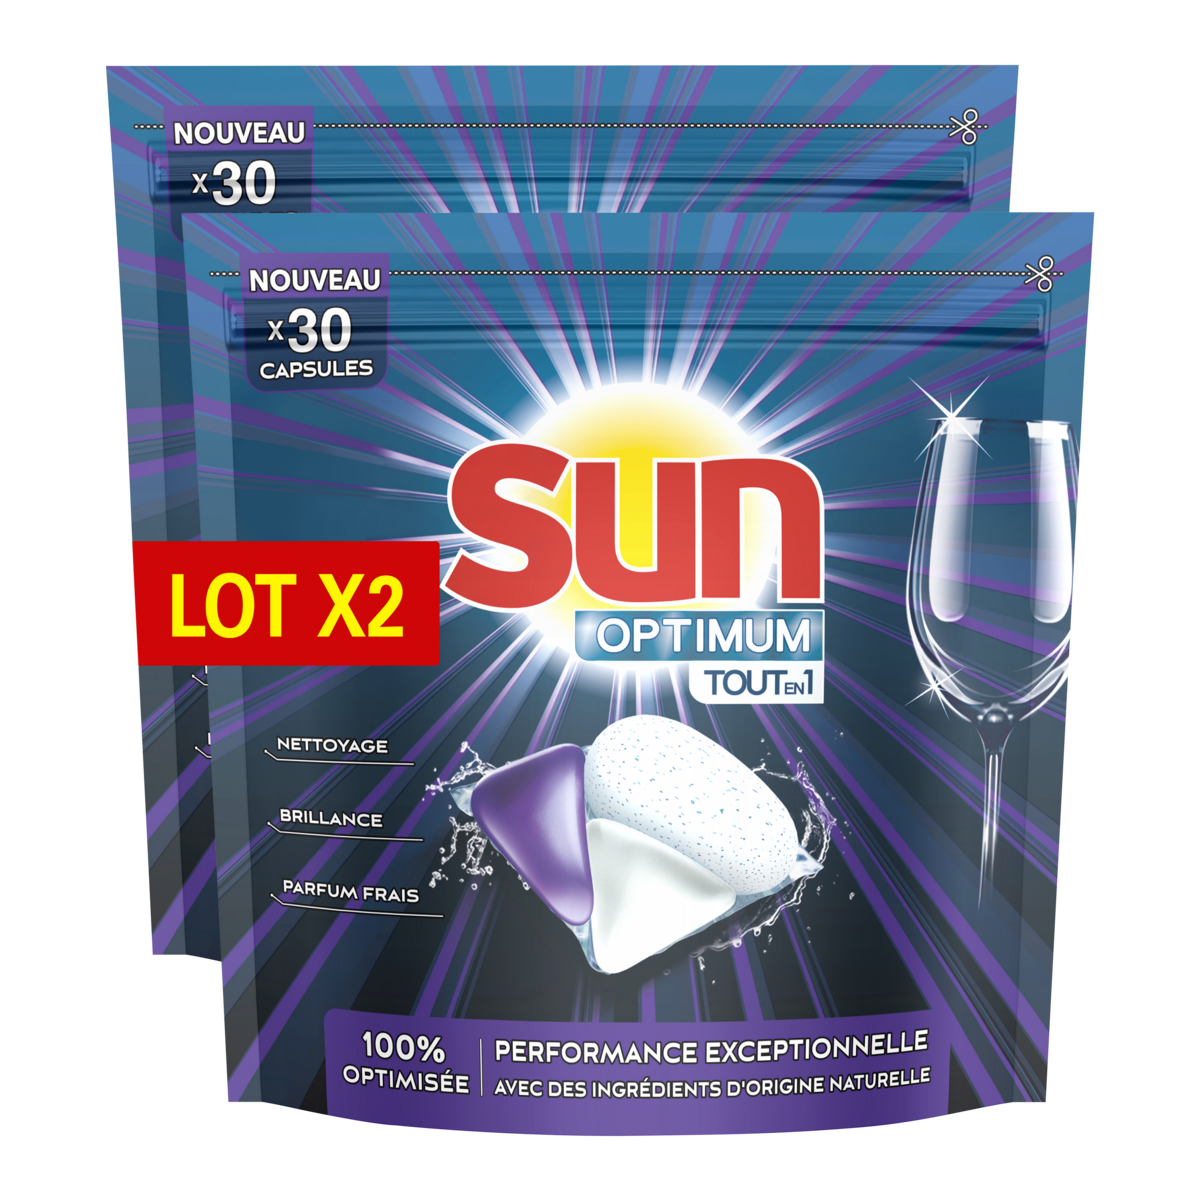 SUN Optimum capsule lave vaisselle tout en 1 2x30 capsules